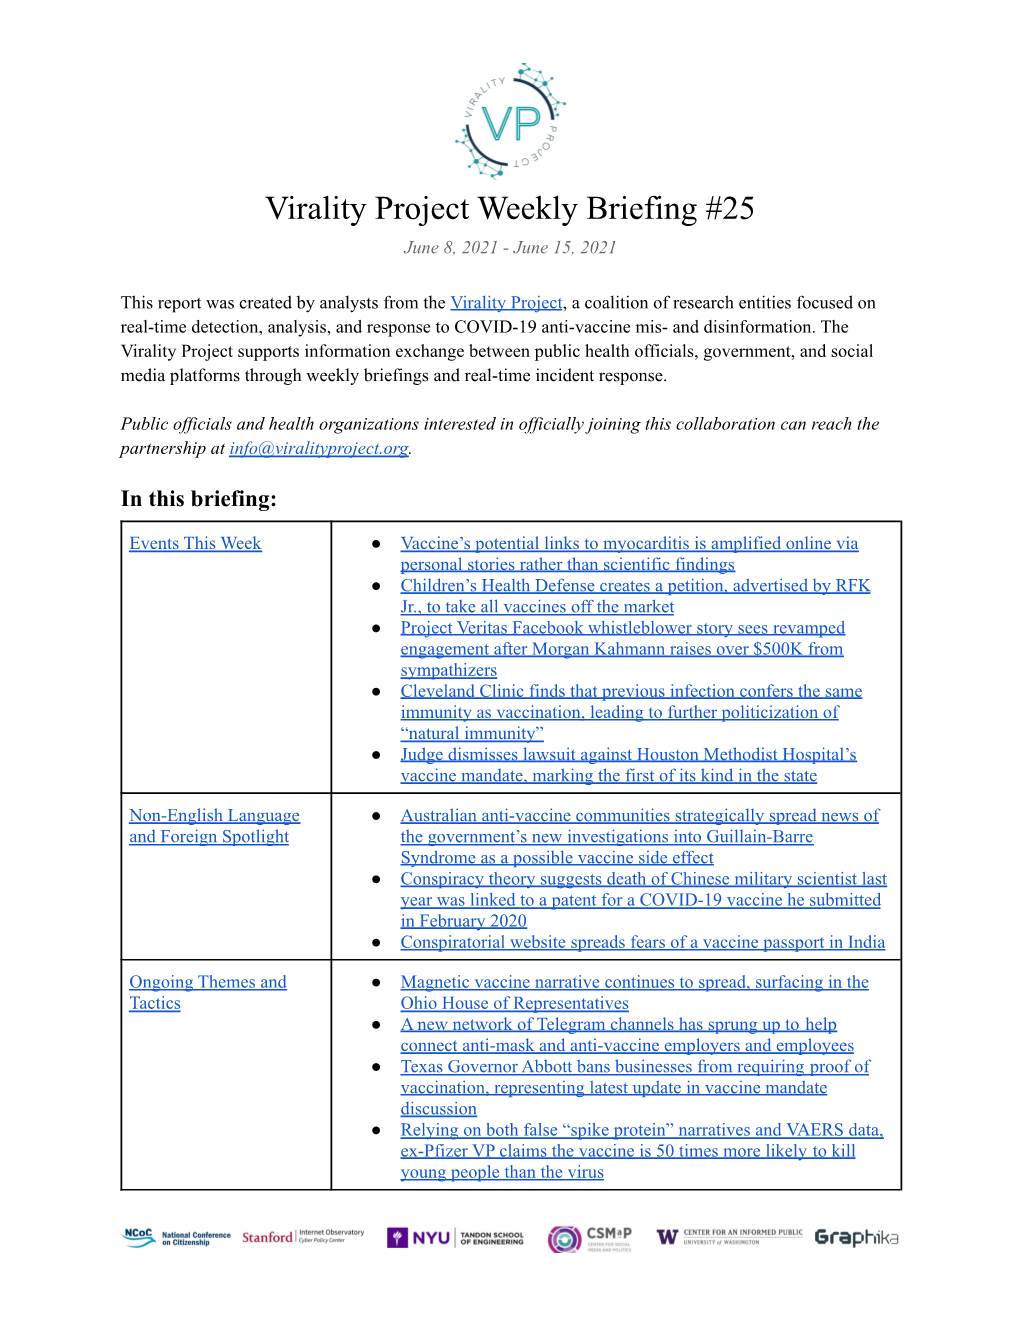 Virality Project Weekly Briefing #25 June 8, 2021 - June 15, 2021